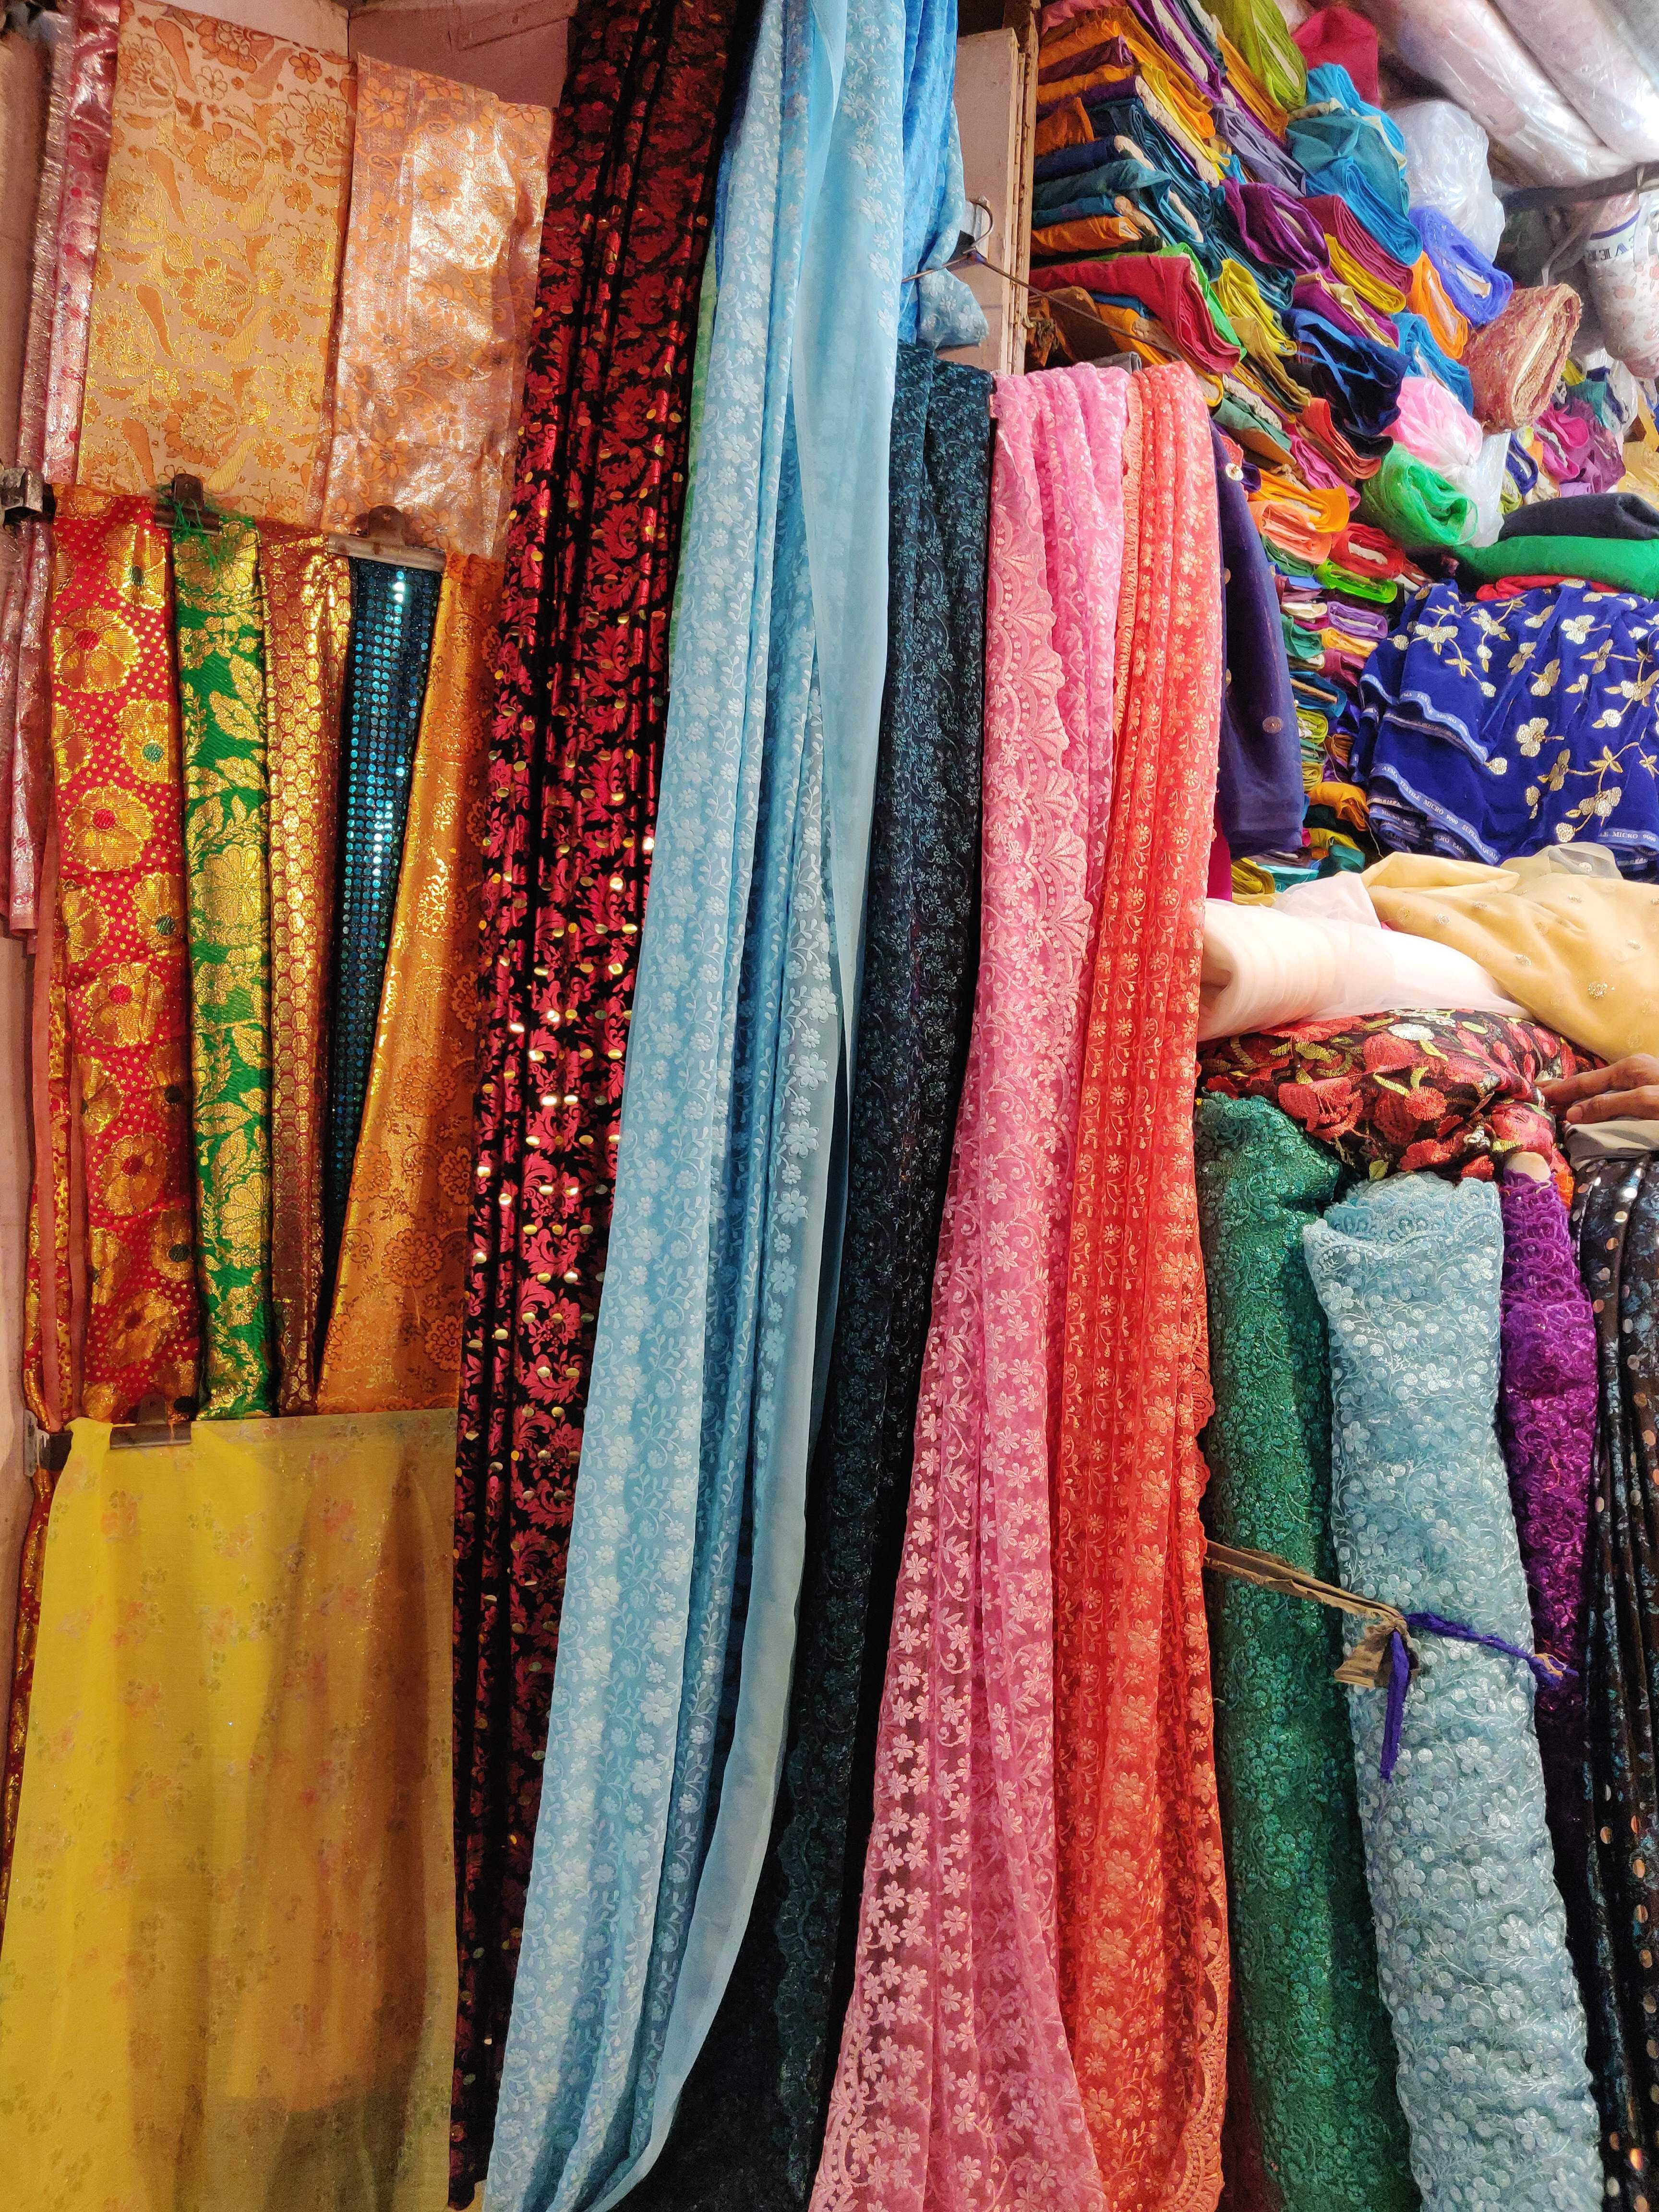 Clothing,Textile,Room,Woven fabric,Boutique,Bazaar,Market,Linens,Magenta,Sari